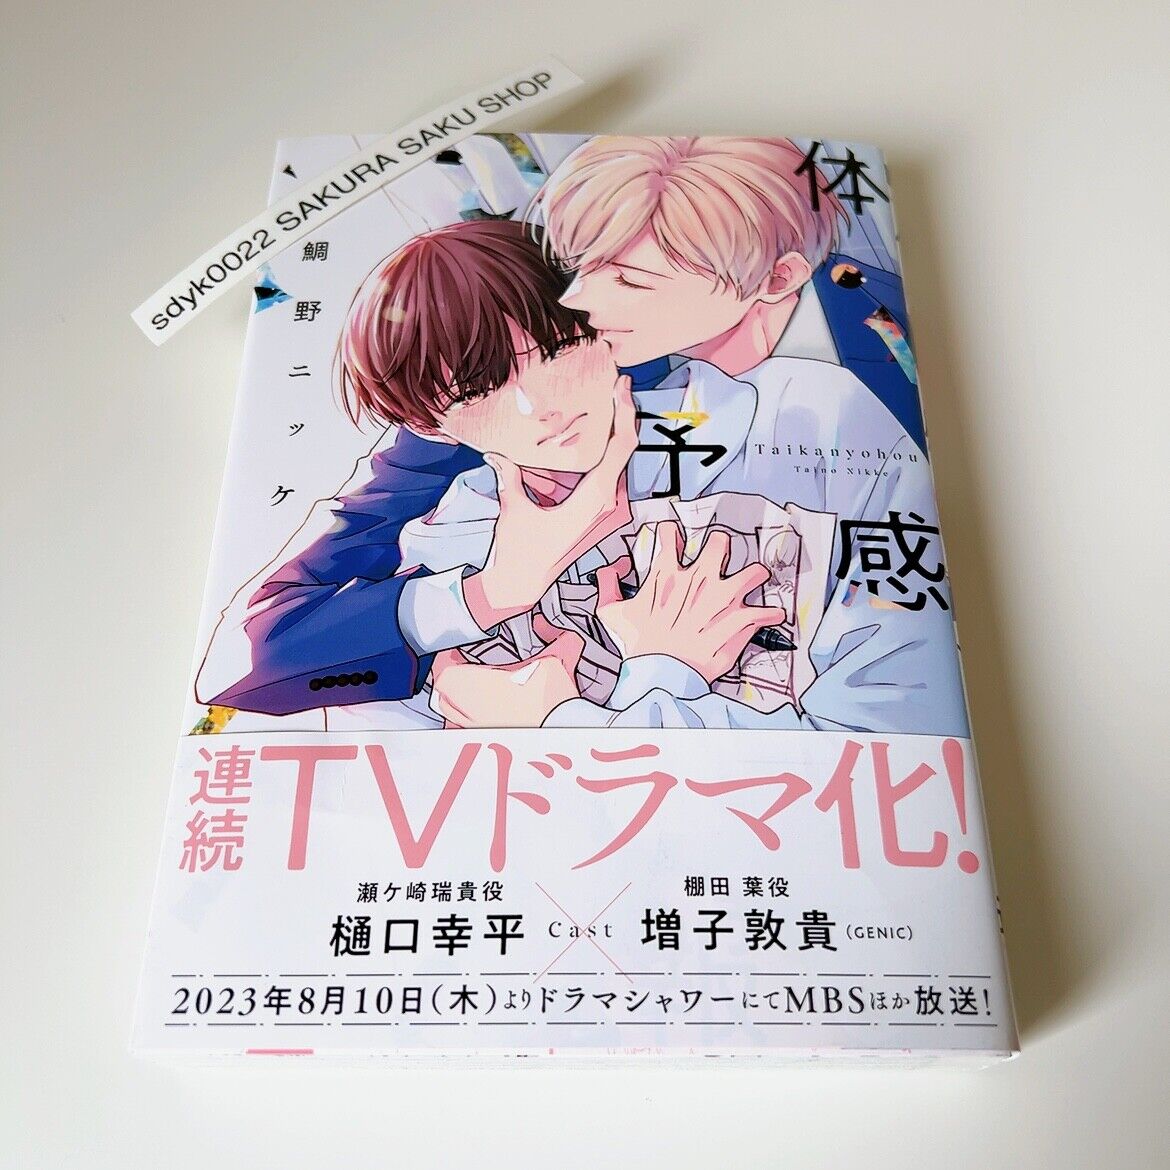 Taikan Yohou Nikke Taino Japanese BL Manga Comic Book My Personal Weatherman